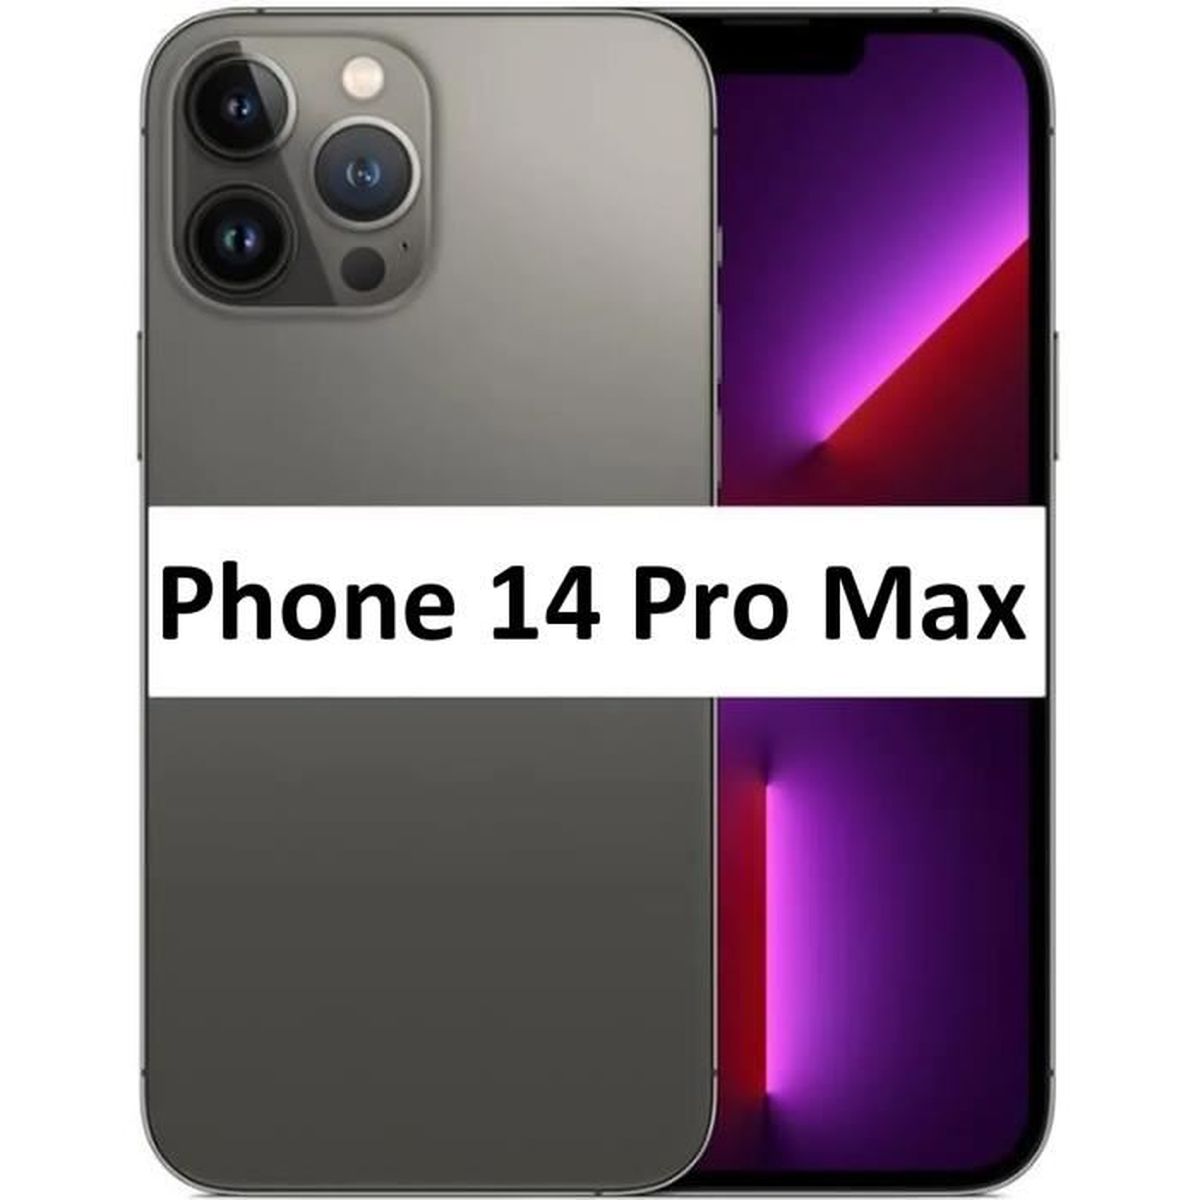 iPhone 13 Pro Max 128go Bleu pas cher - Apple iPhone - Achat moins cher